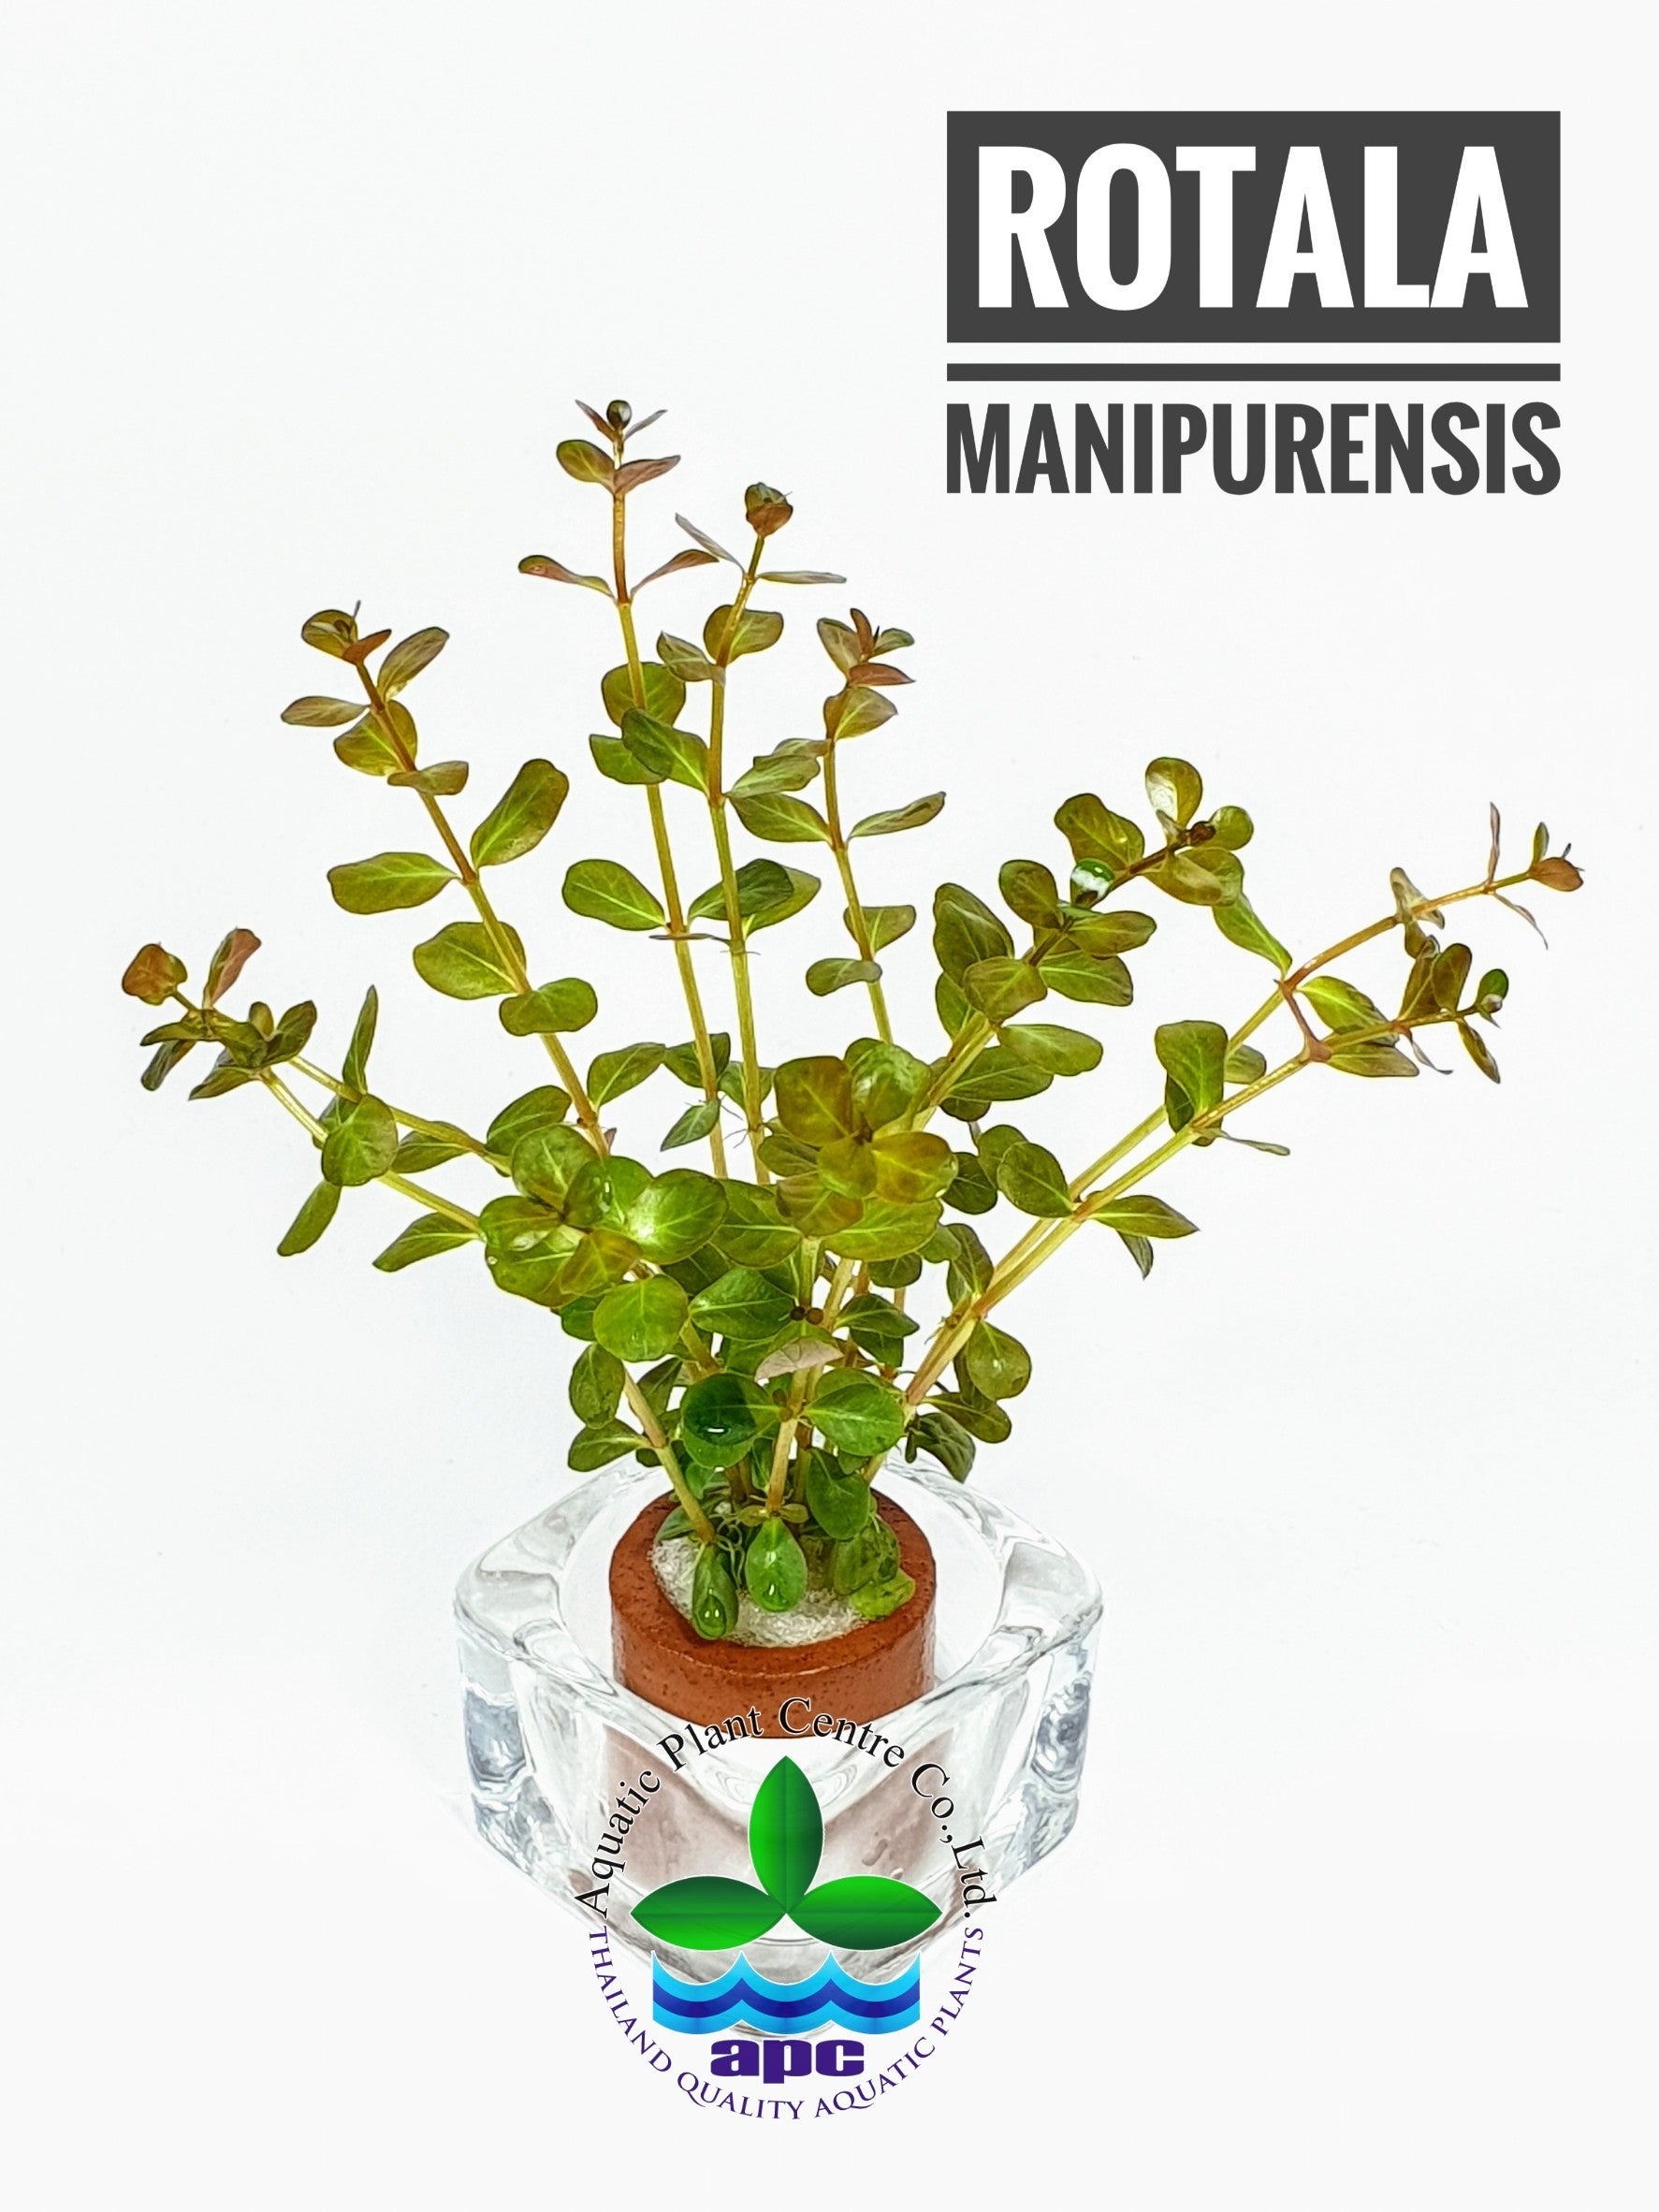 Rotala rotundifolia manipurensis